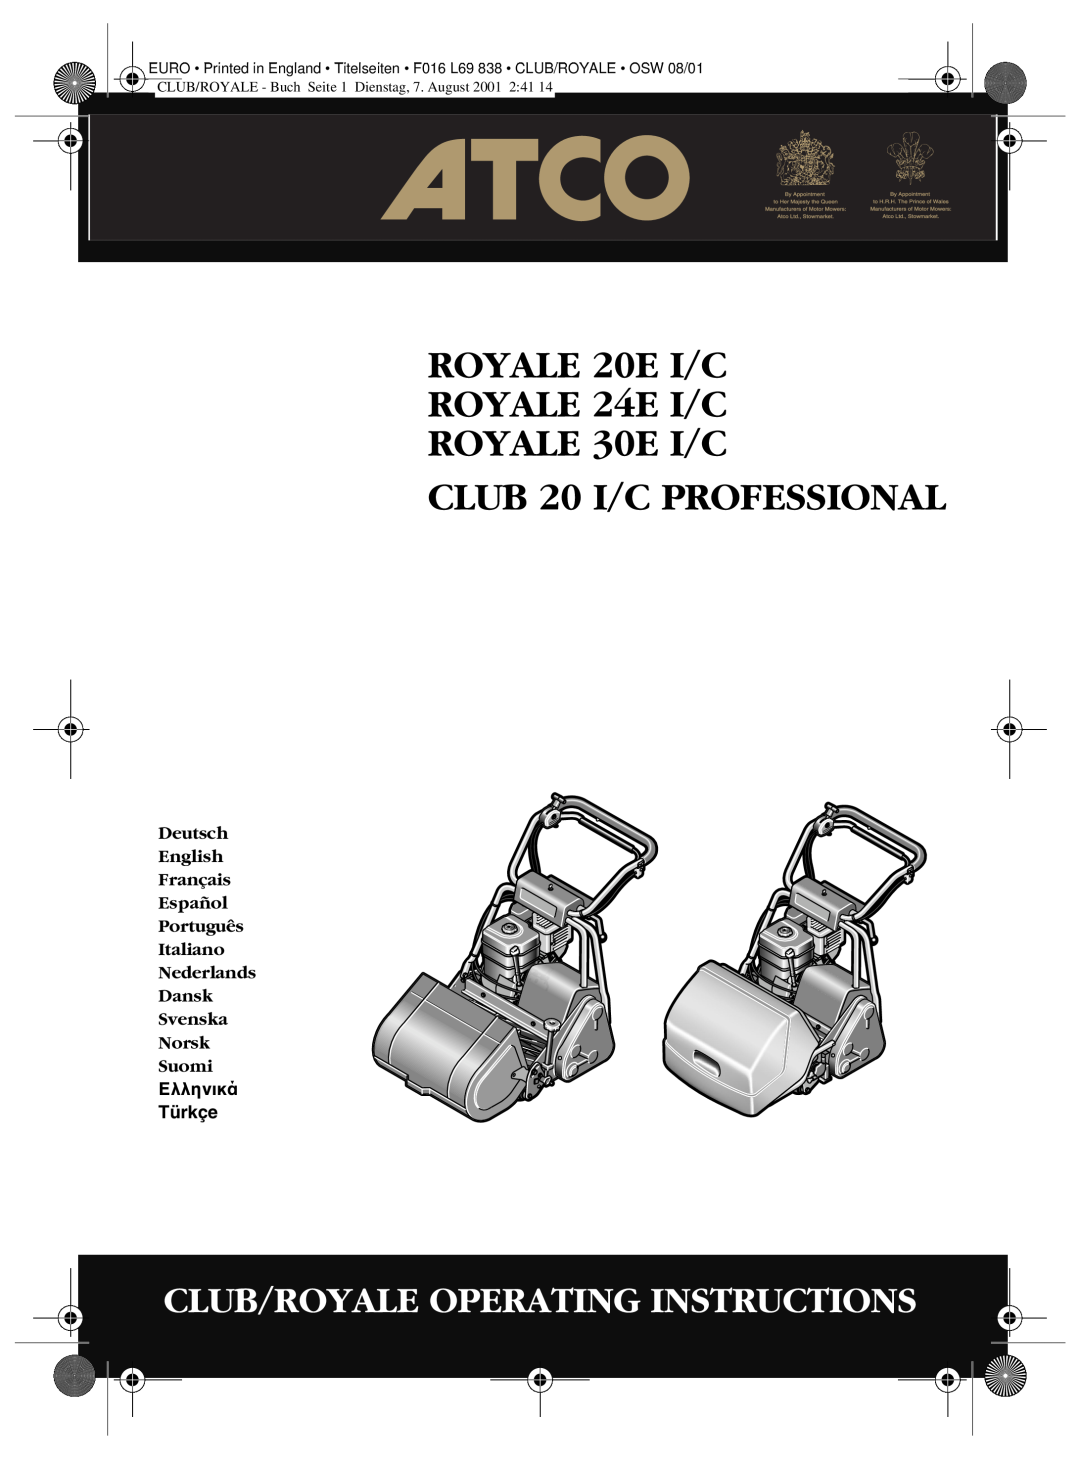 Atco ROYALE 20E I/C, ROYALE 24E I/C, ROYALE 30E I/C, CLUB 20 I/C PROFESSIONAL manual Club/Royale Operating Instructions 